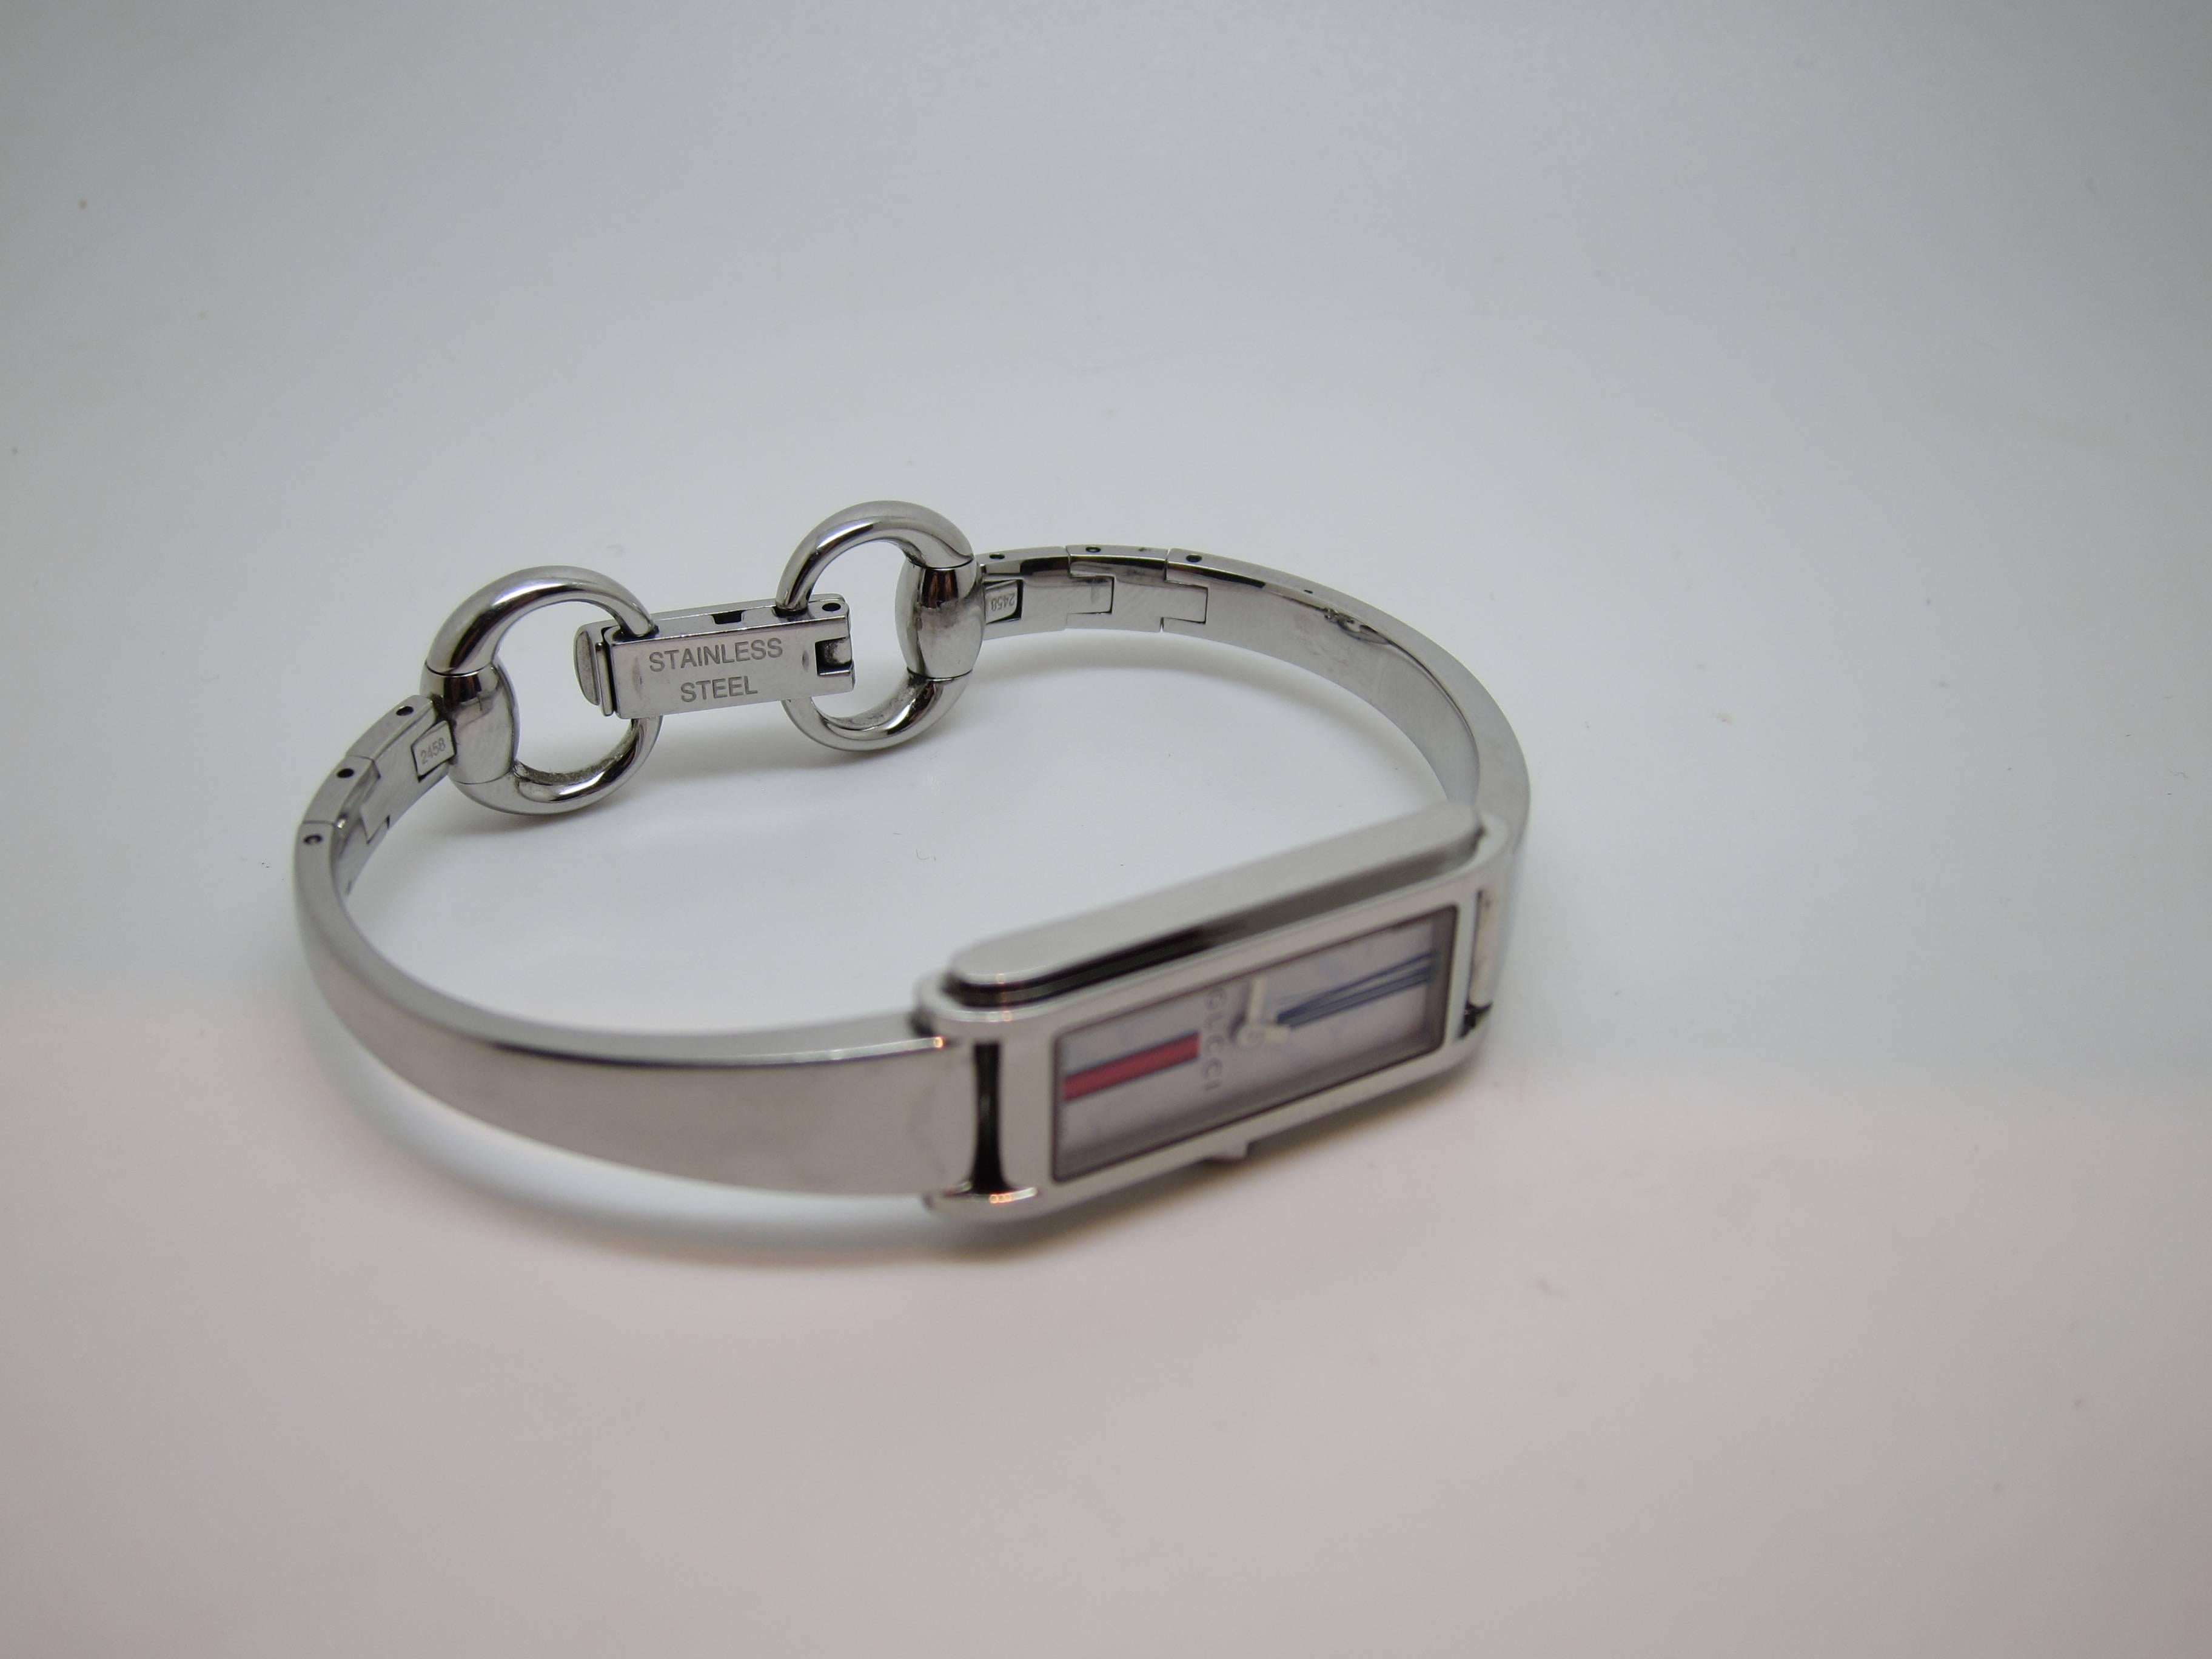 Gucci Stainless Steel Horsebite Watch

Wrist size 15,5 cm